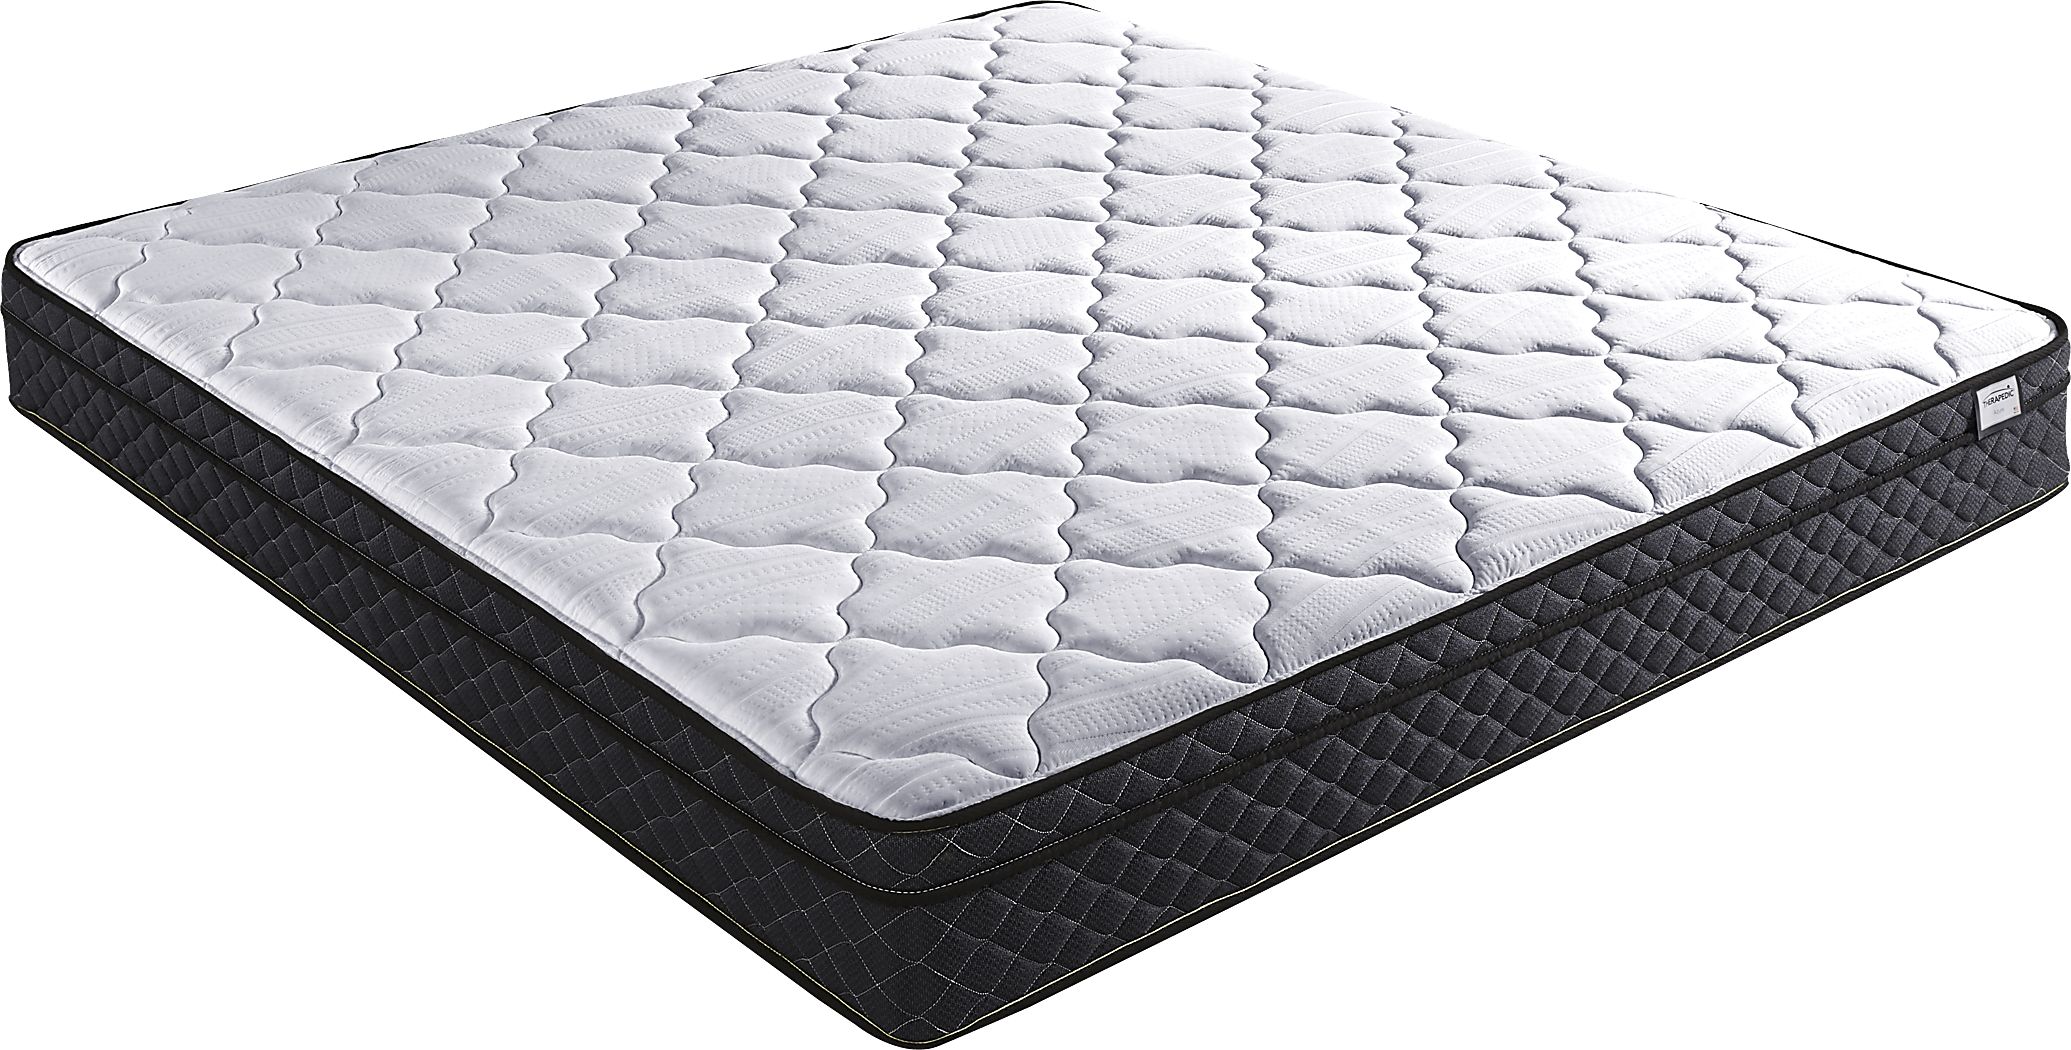 therapedic azure mattress reviews